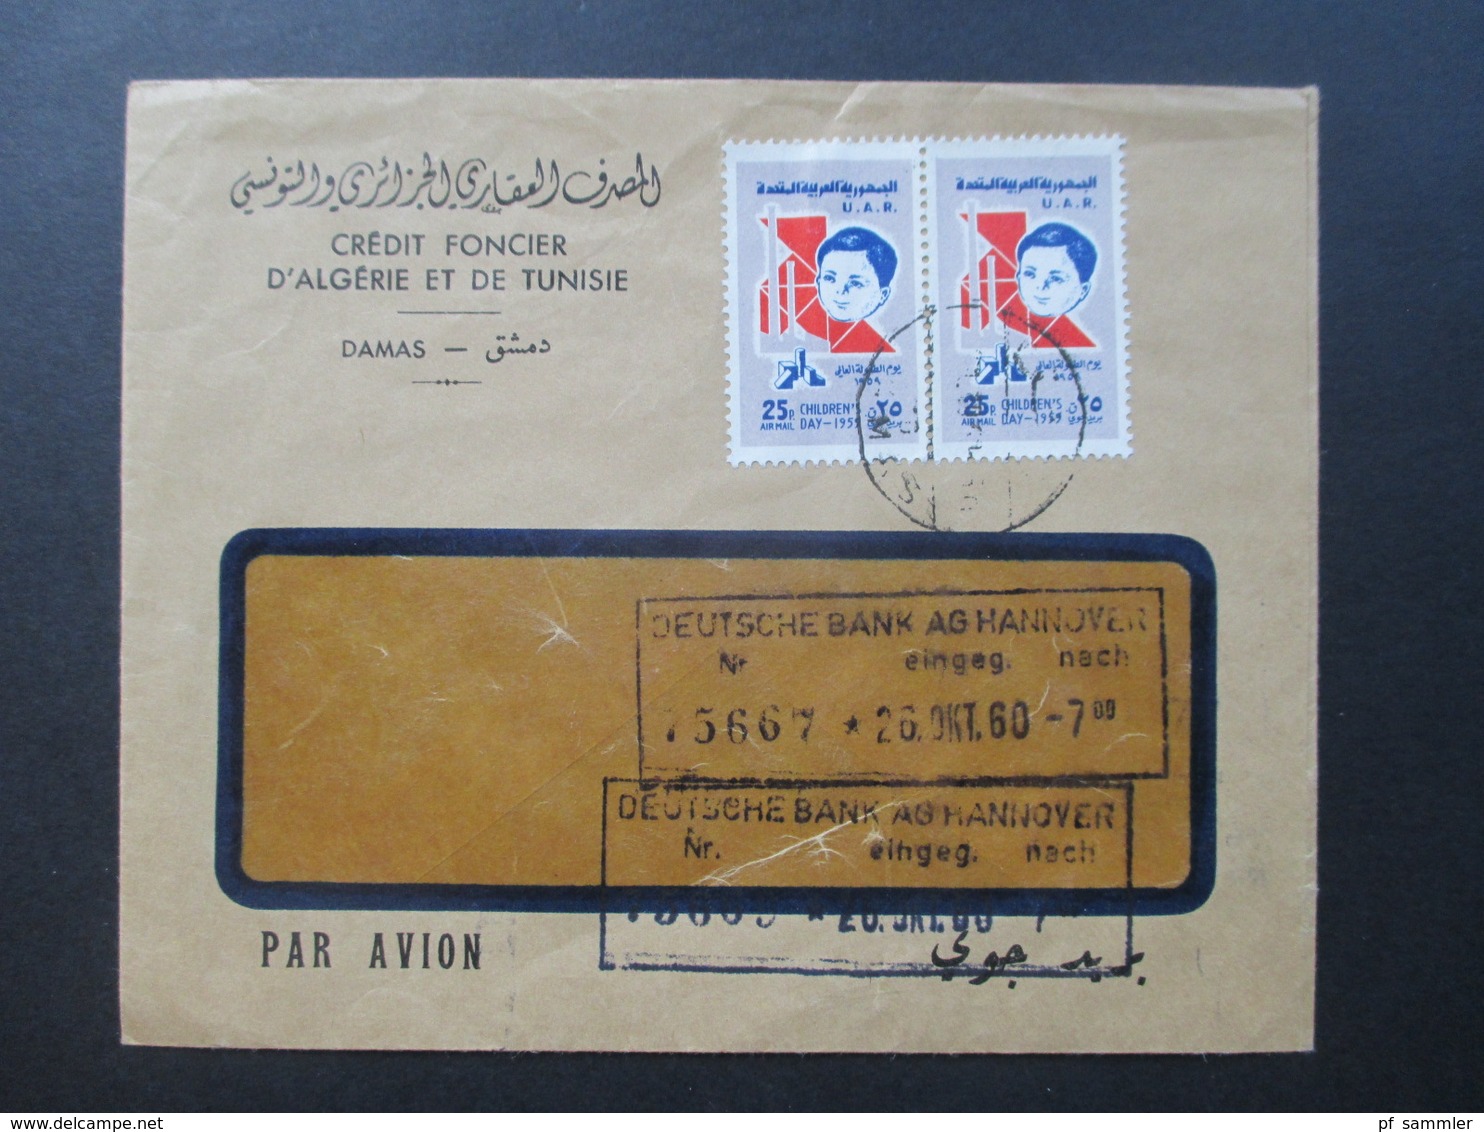 Syrien / UAR 1960 Air Mail / Luftpost Credit Foncier D'Algerie Et De Tunisie Damas. Marken Children's Day 1959 - Syrie